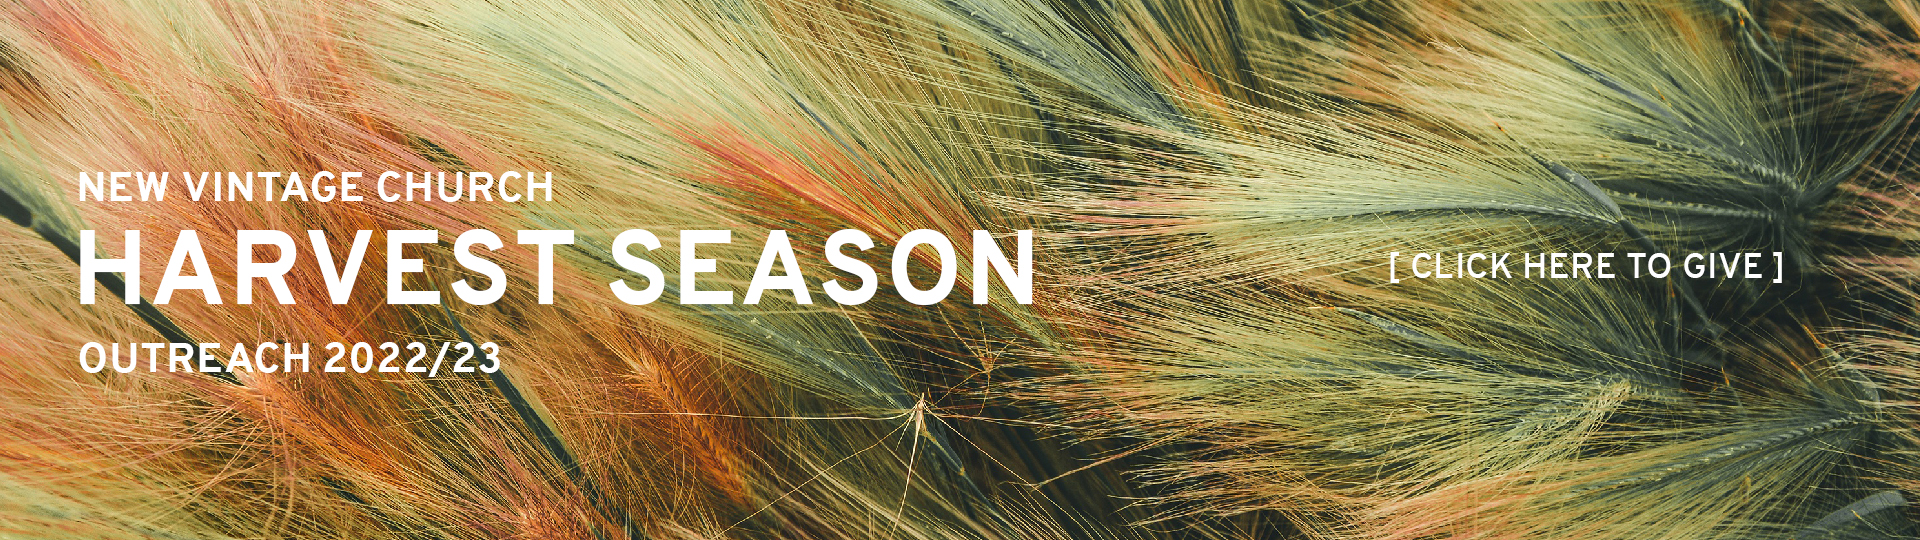 harvest season web banner